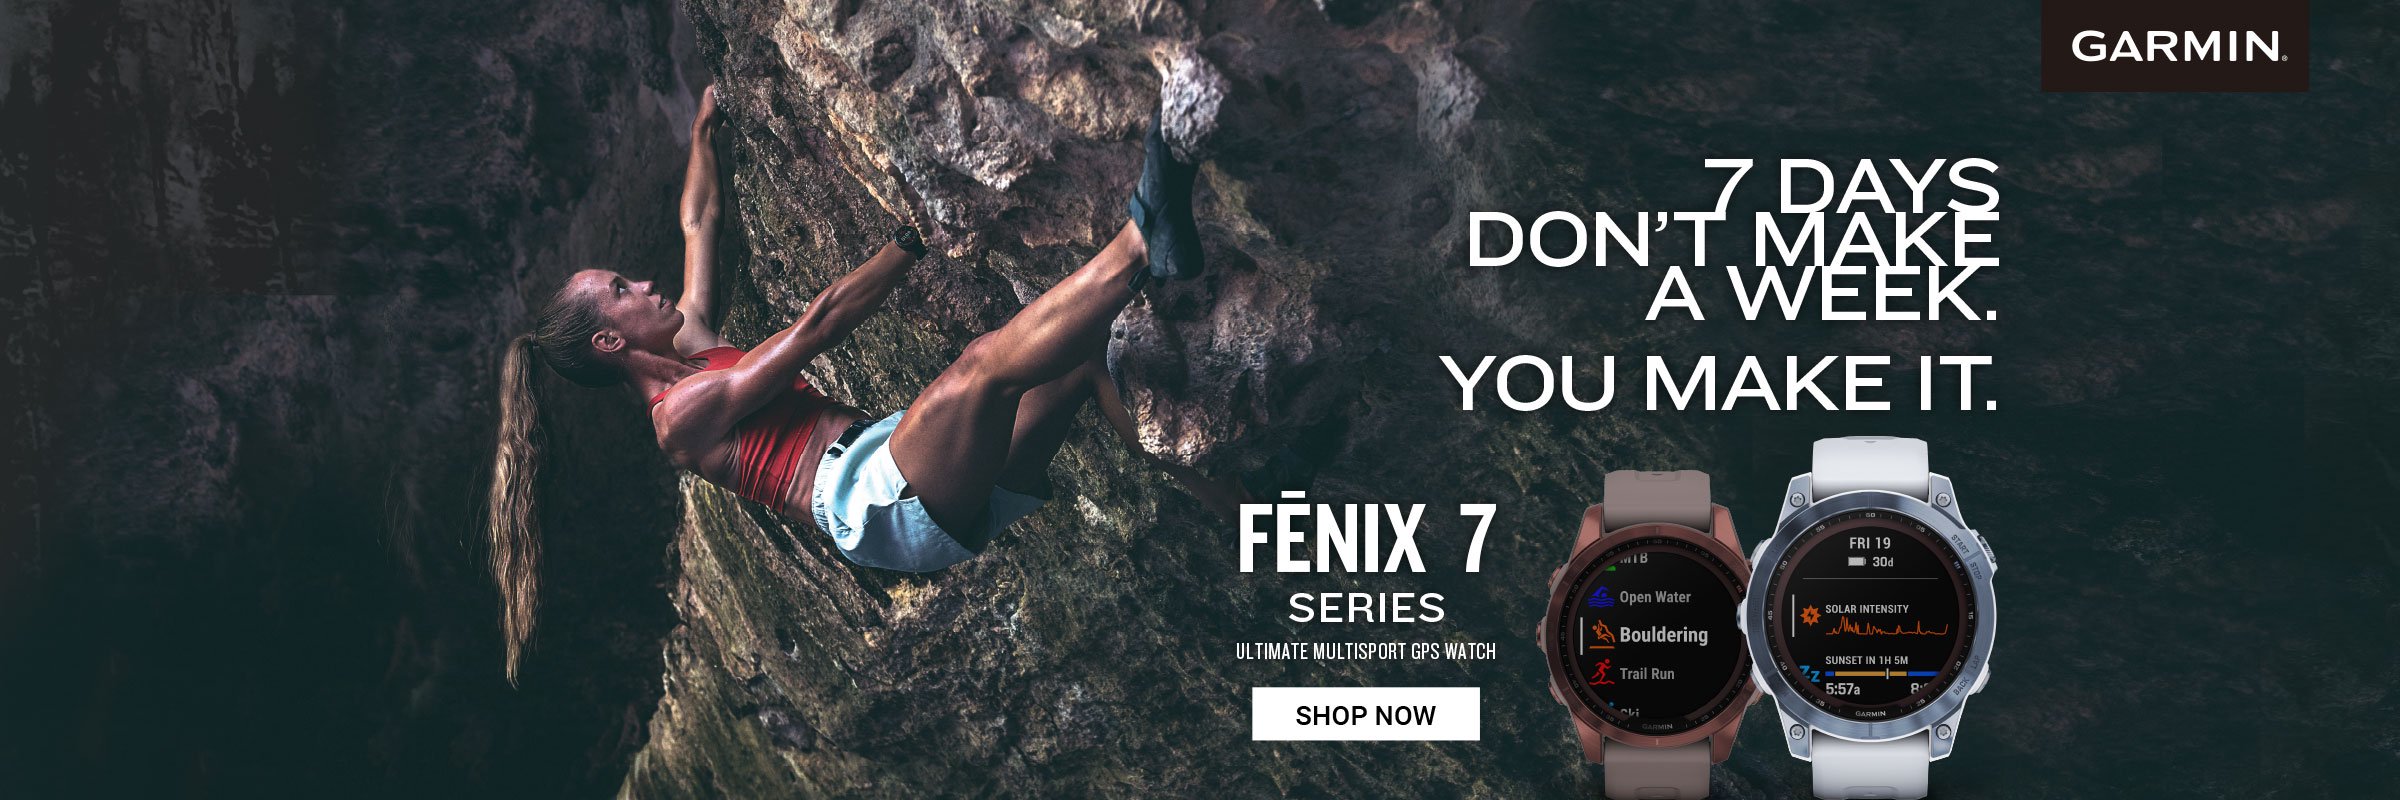 Fenix 7 collection